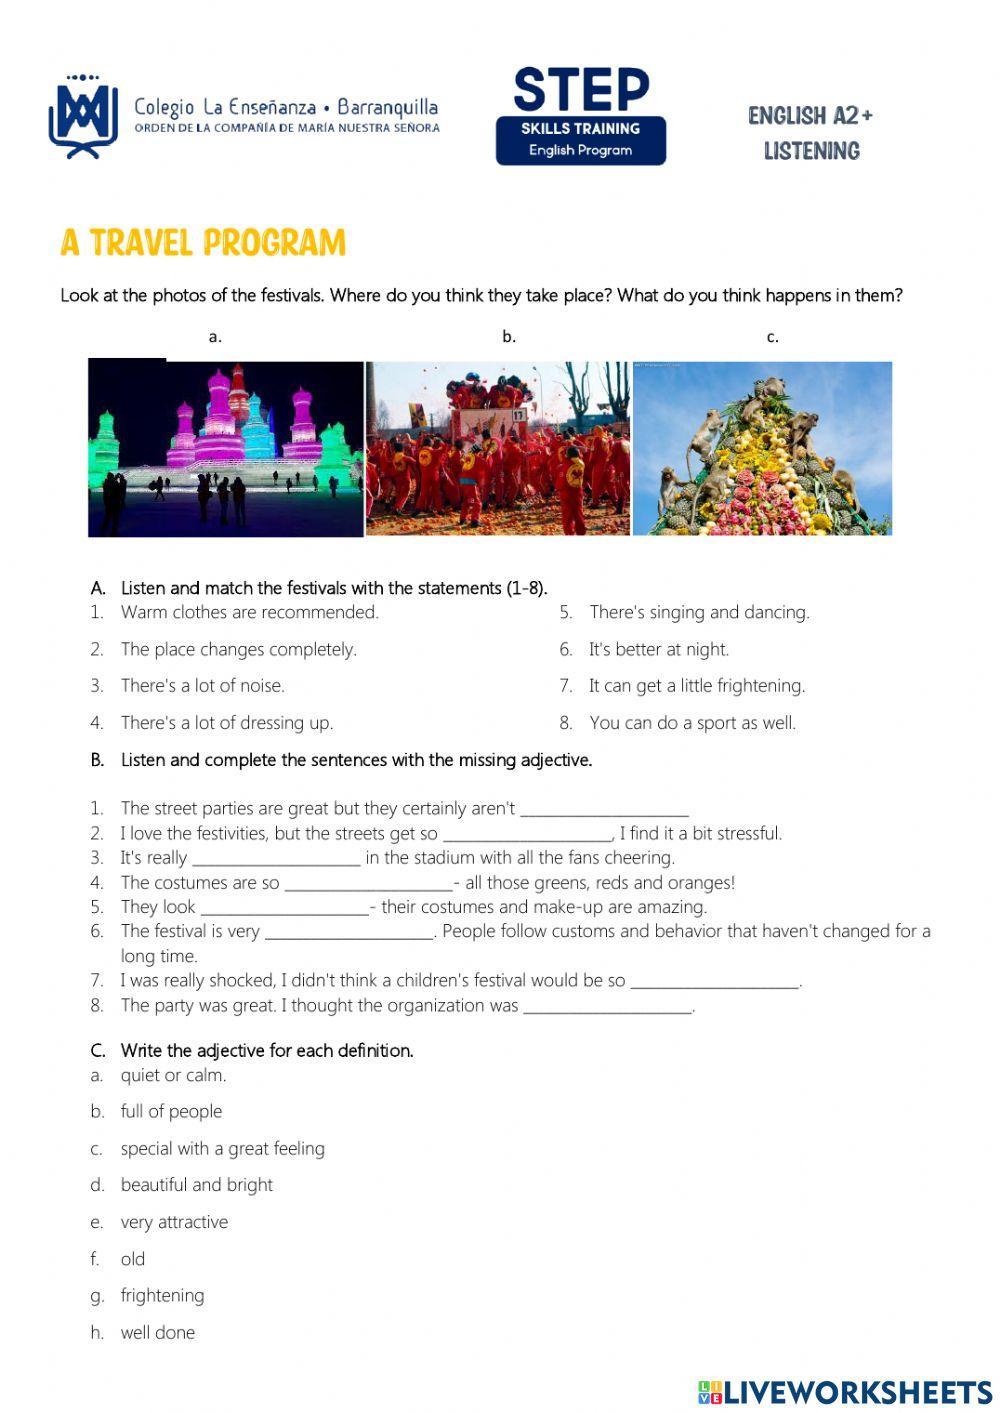 A travel program